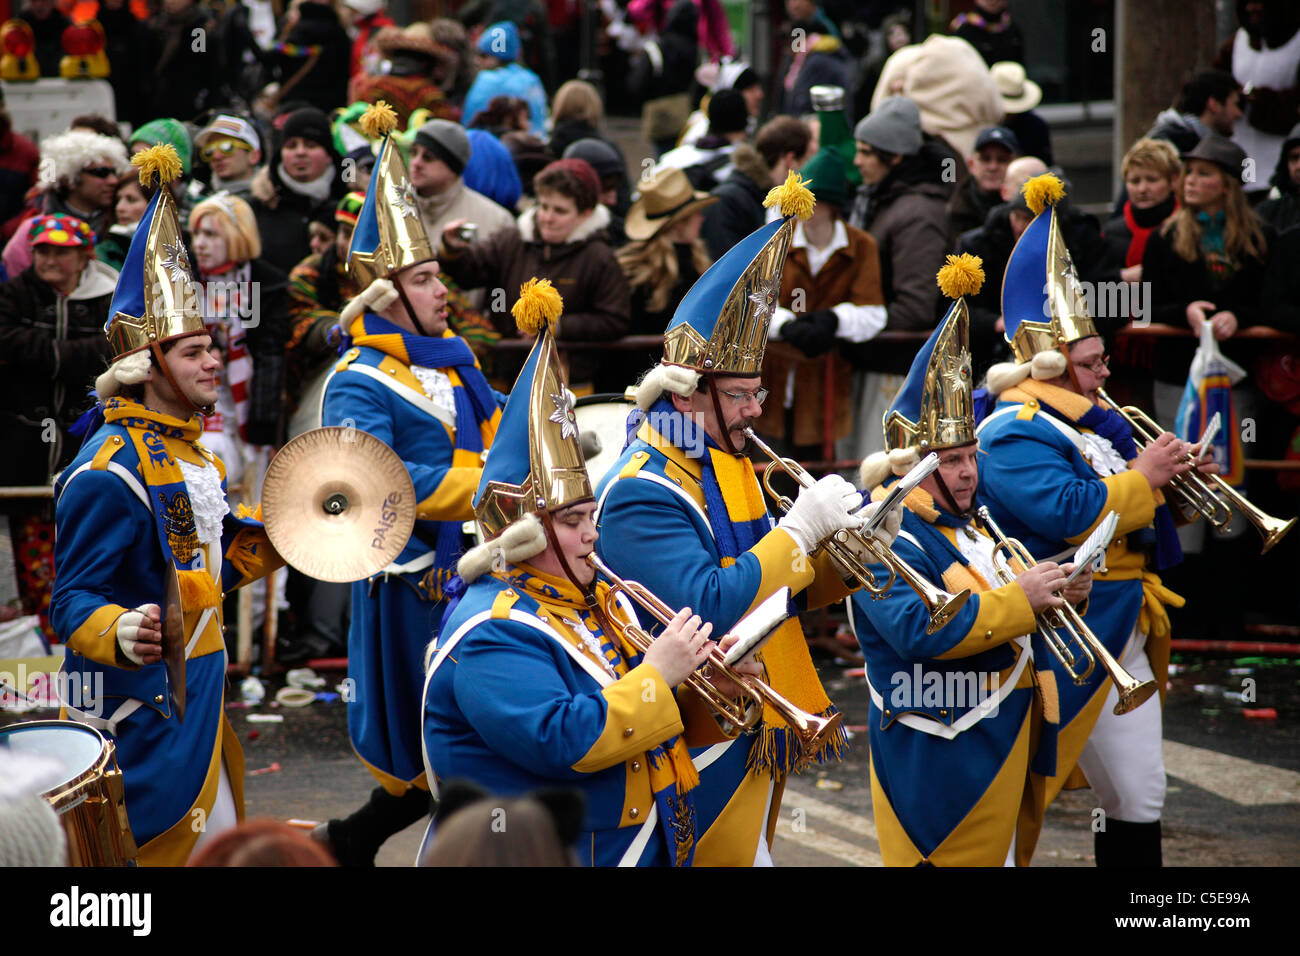 Rosenmontagszug parade, Carnival 2010 in Cologne, North Rhine-Westphalia, Germany, Europe Stock Photo